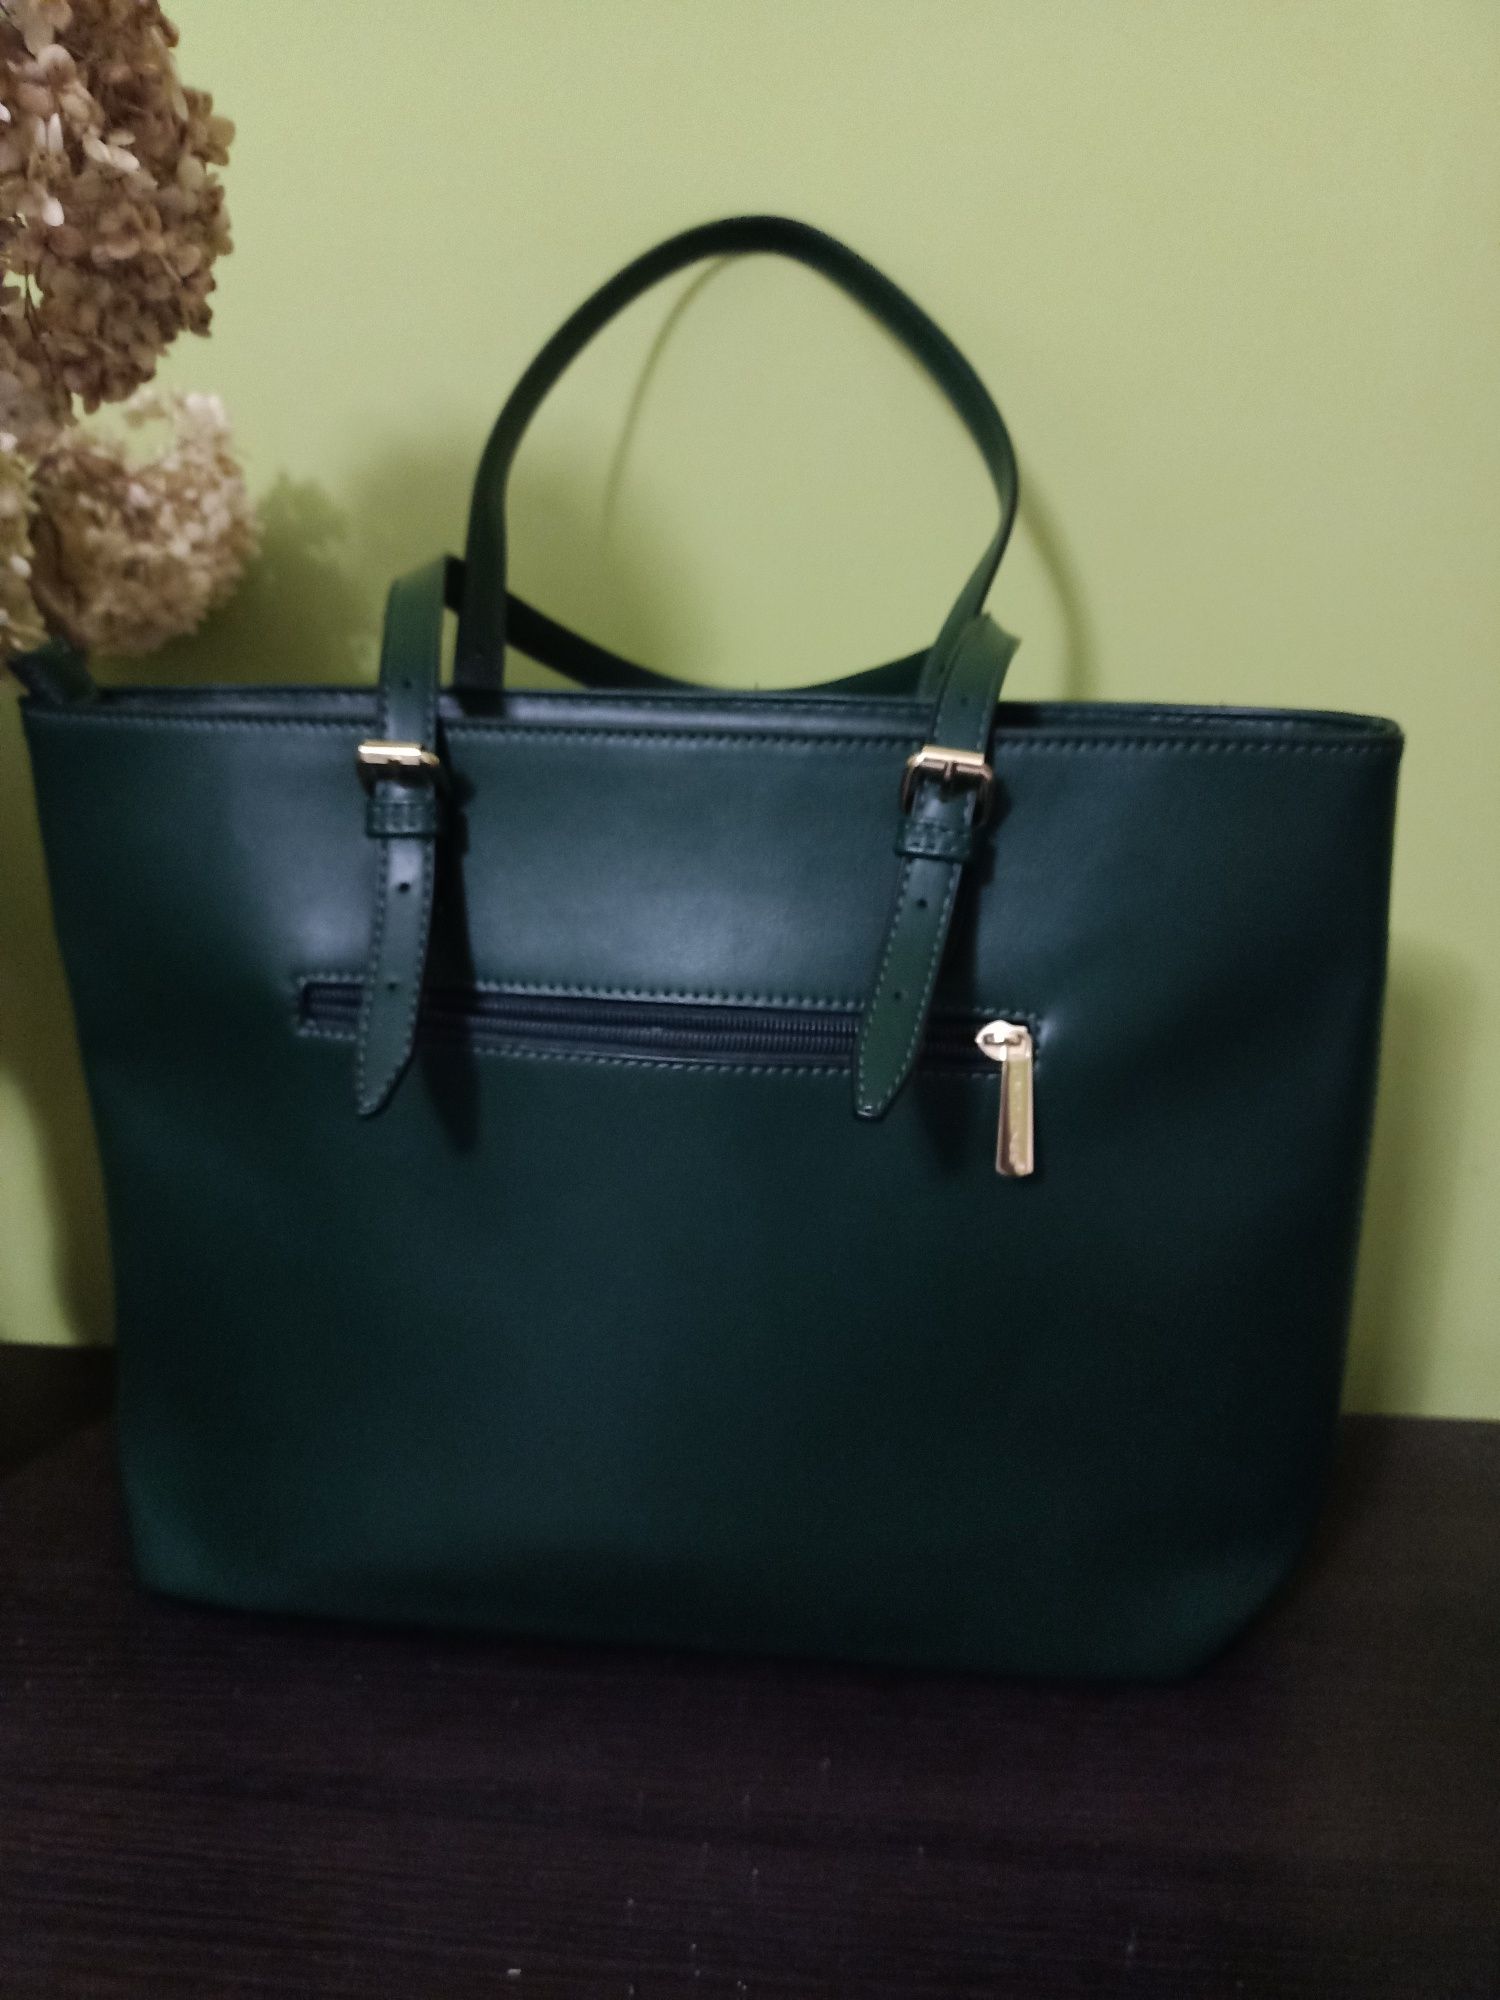 Nowa torba shopperka, piękny zielony kolor